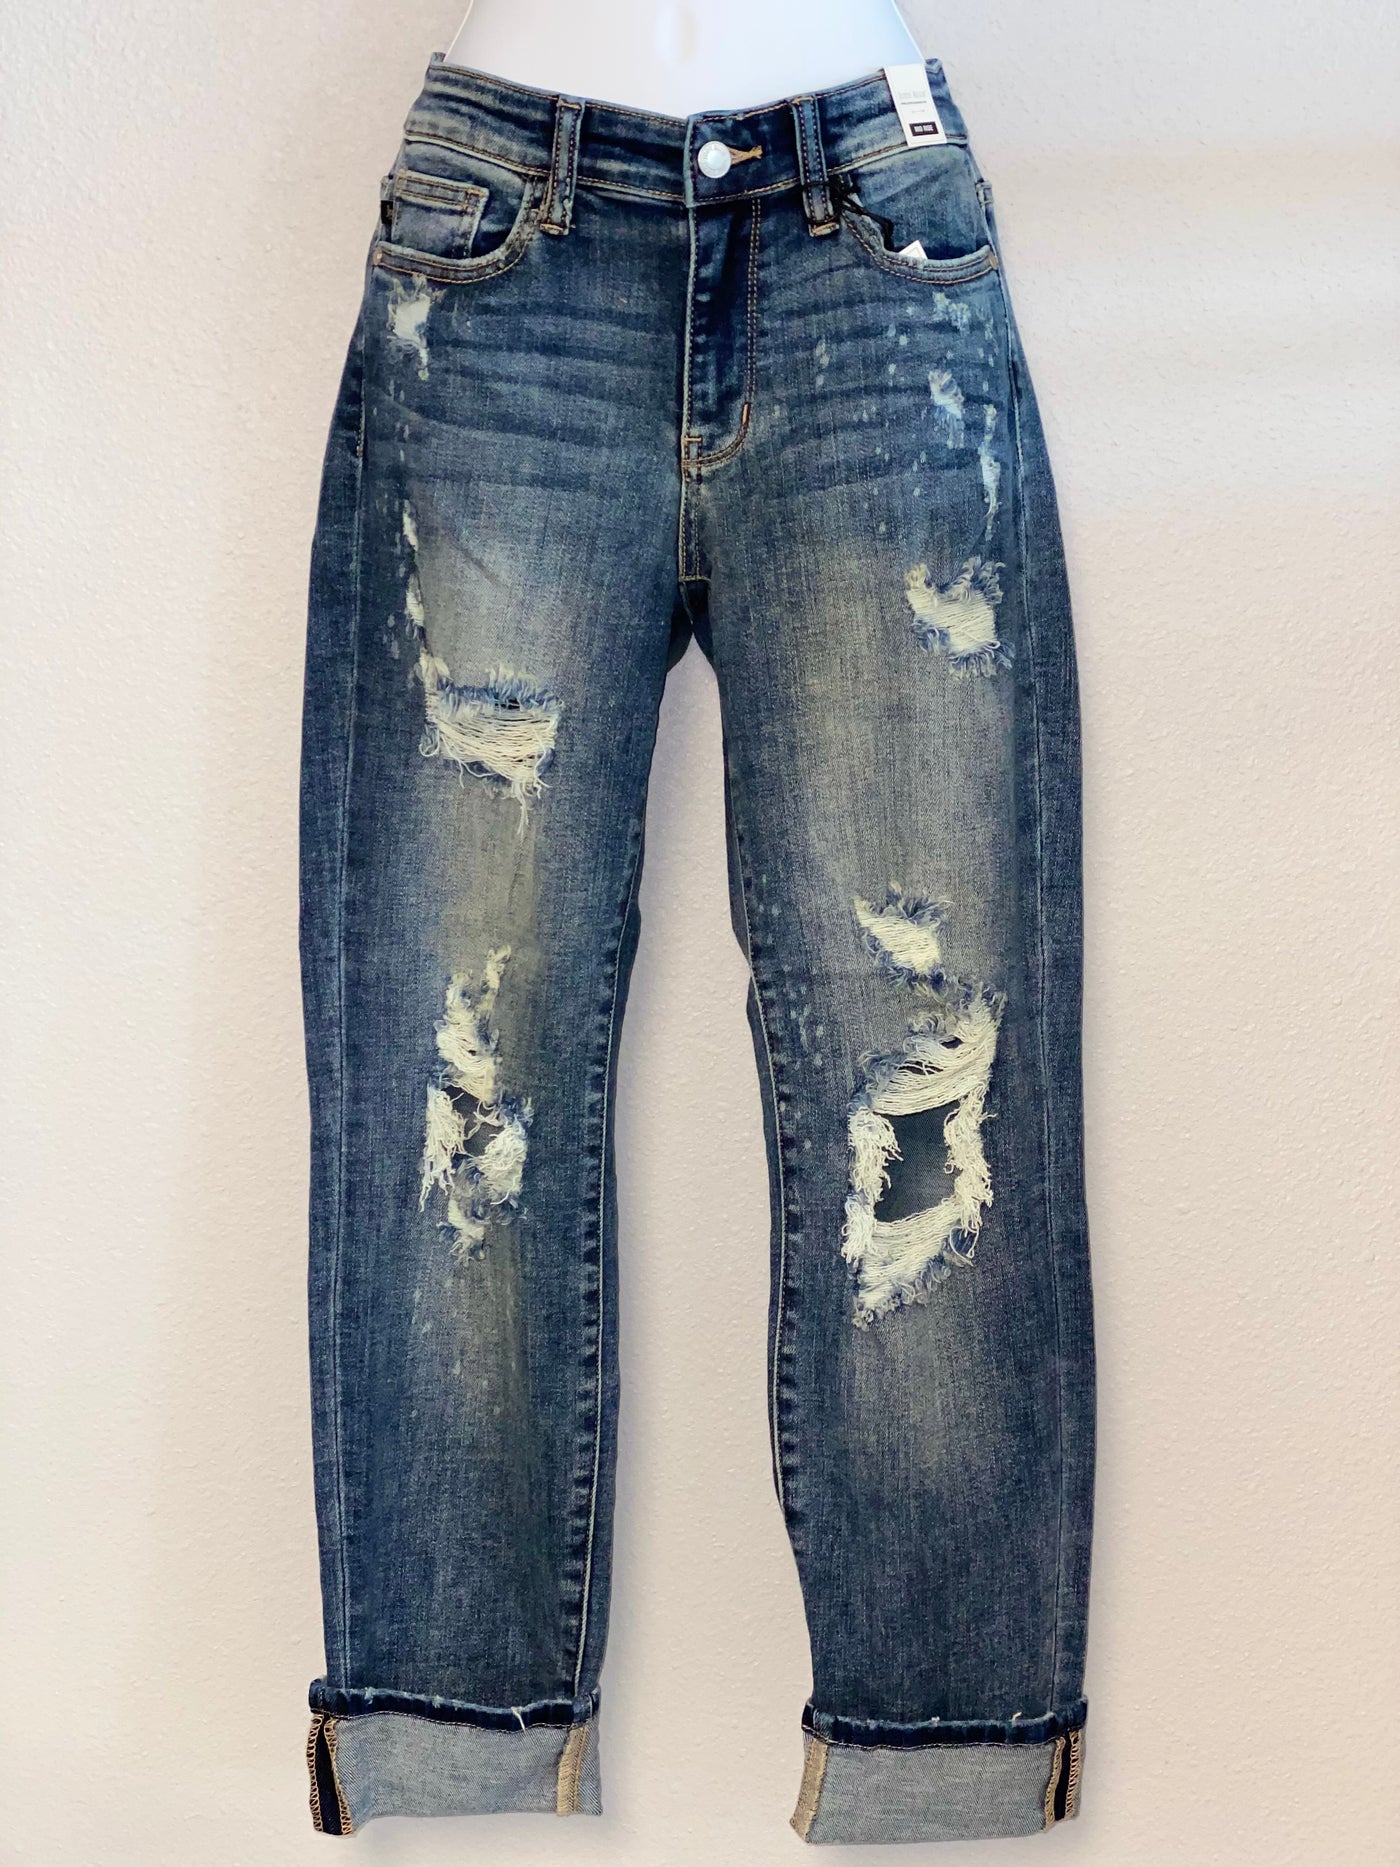 Judy Blue Boyfriend Distressed Jeans Shows Skin